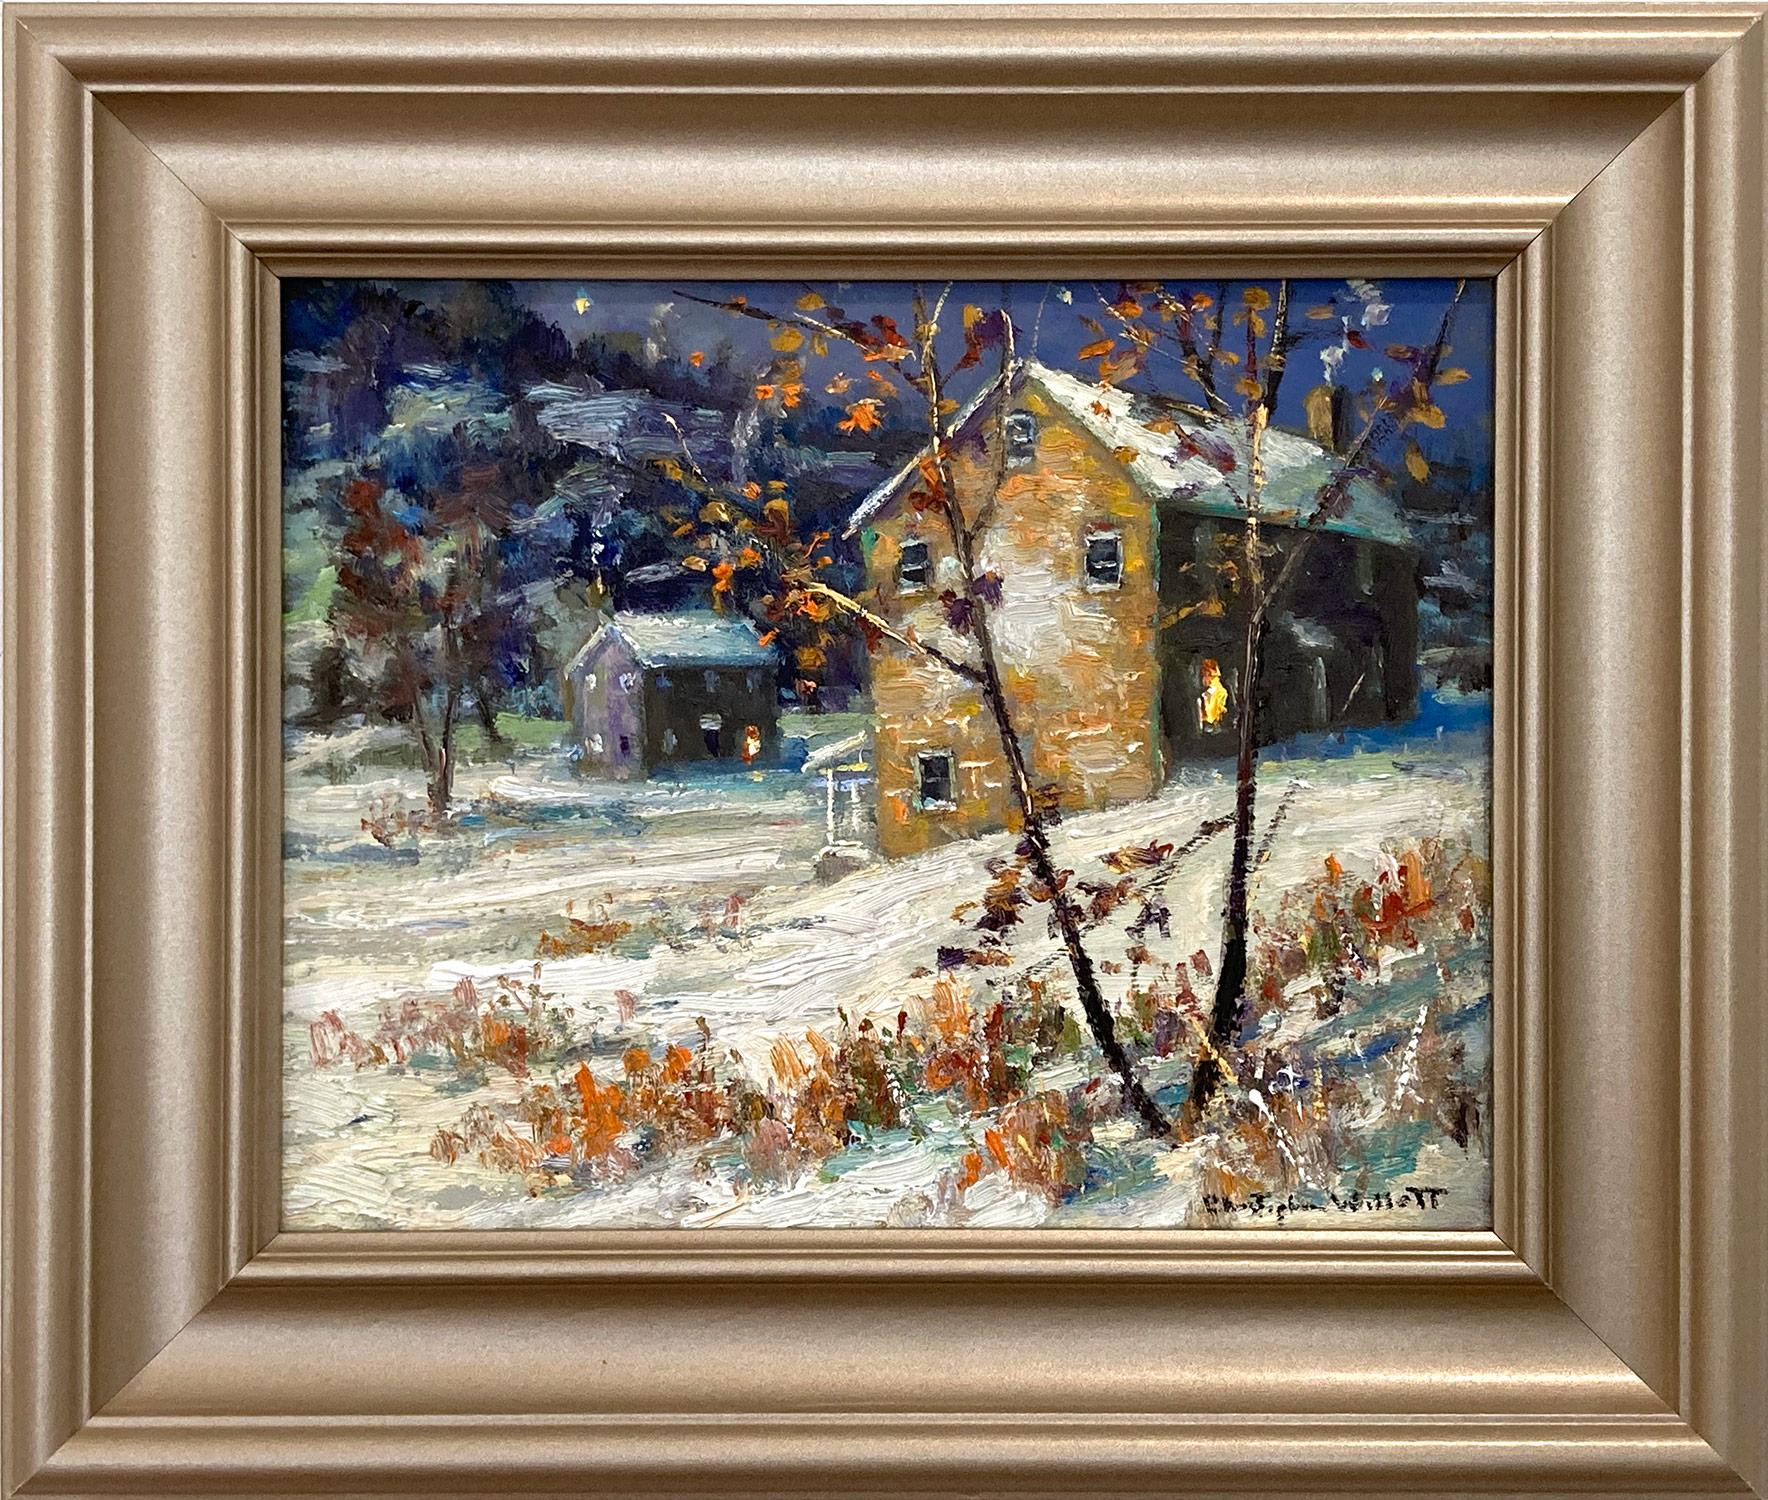 Christopher Willett Landscape Painting - "Road to Doylestown" Bucks County Twilight Snow Scene Landscape Oil Painting 